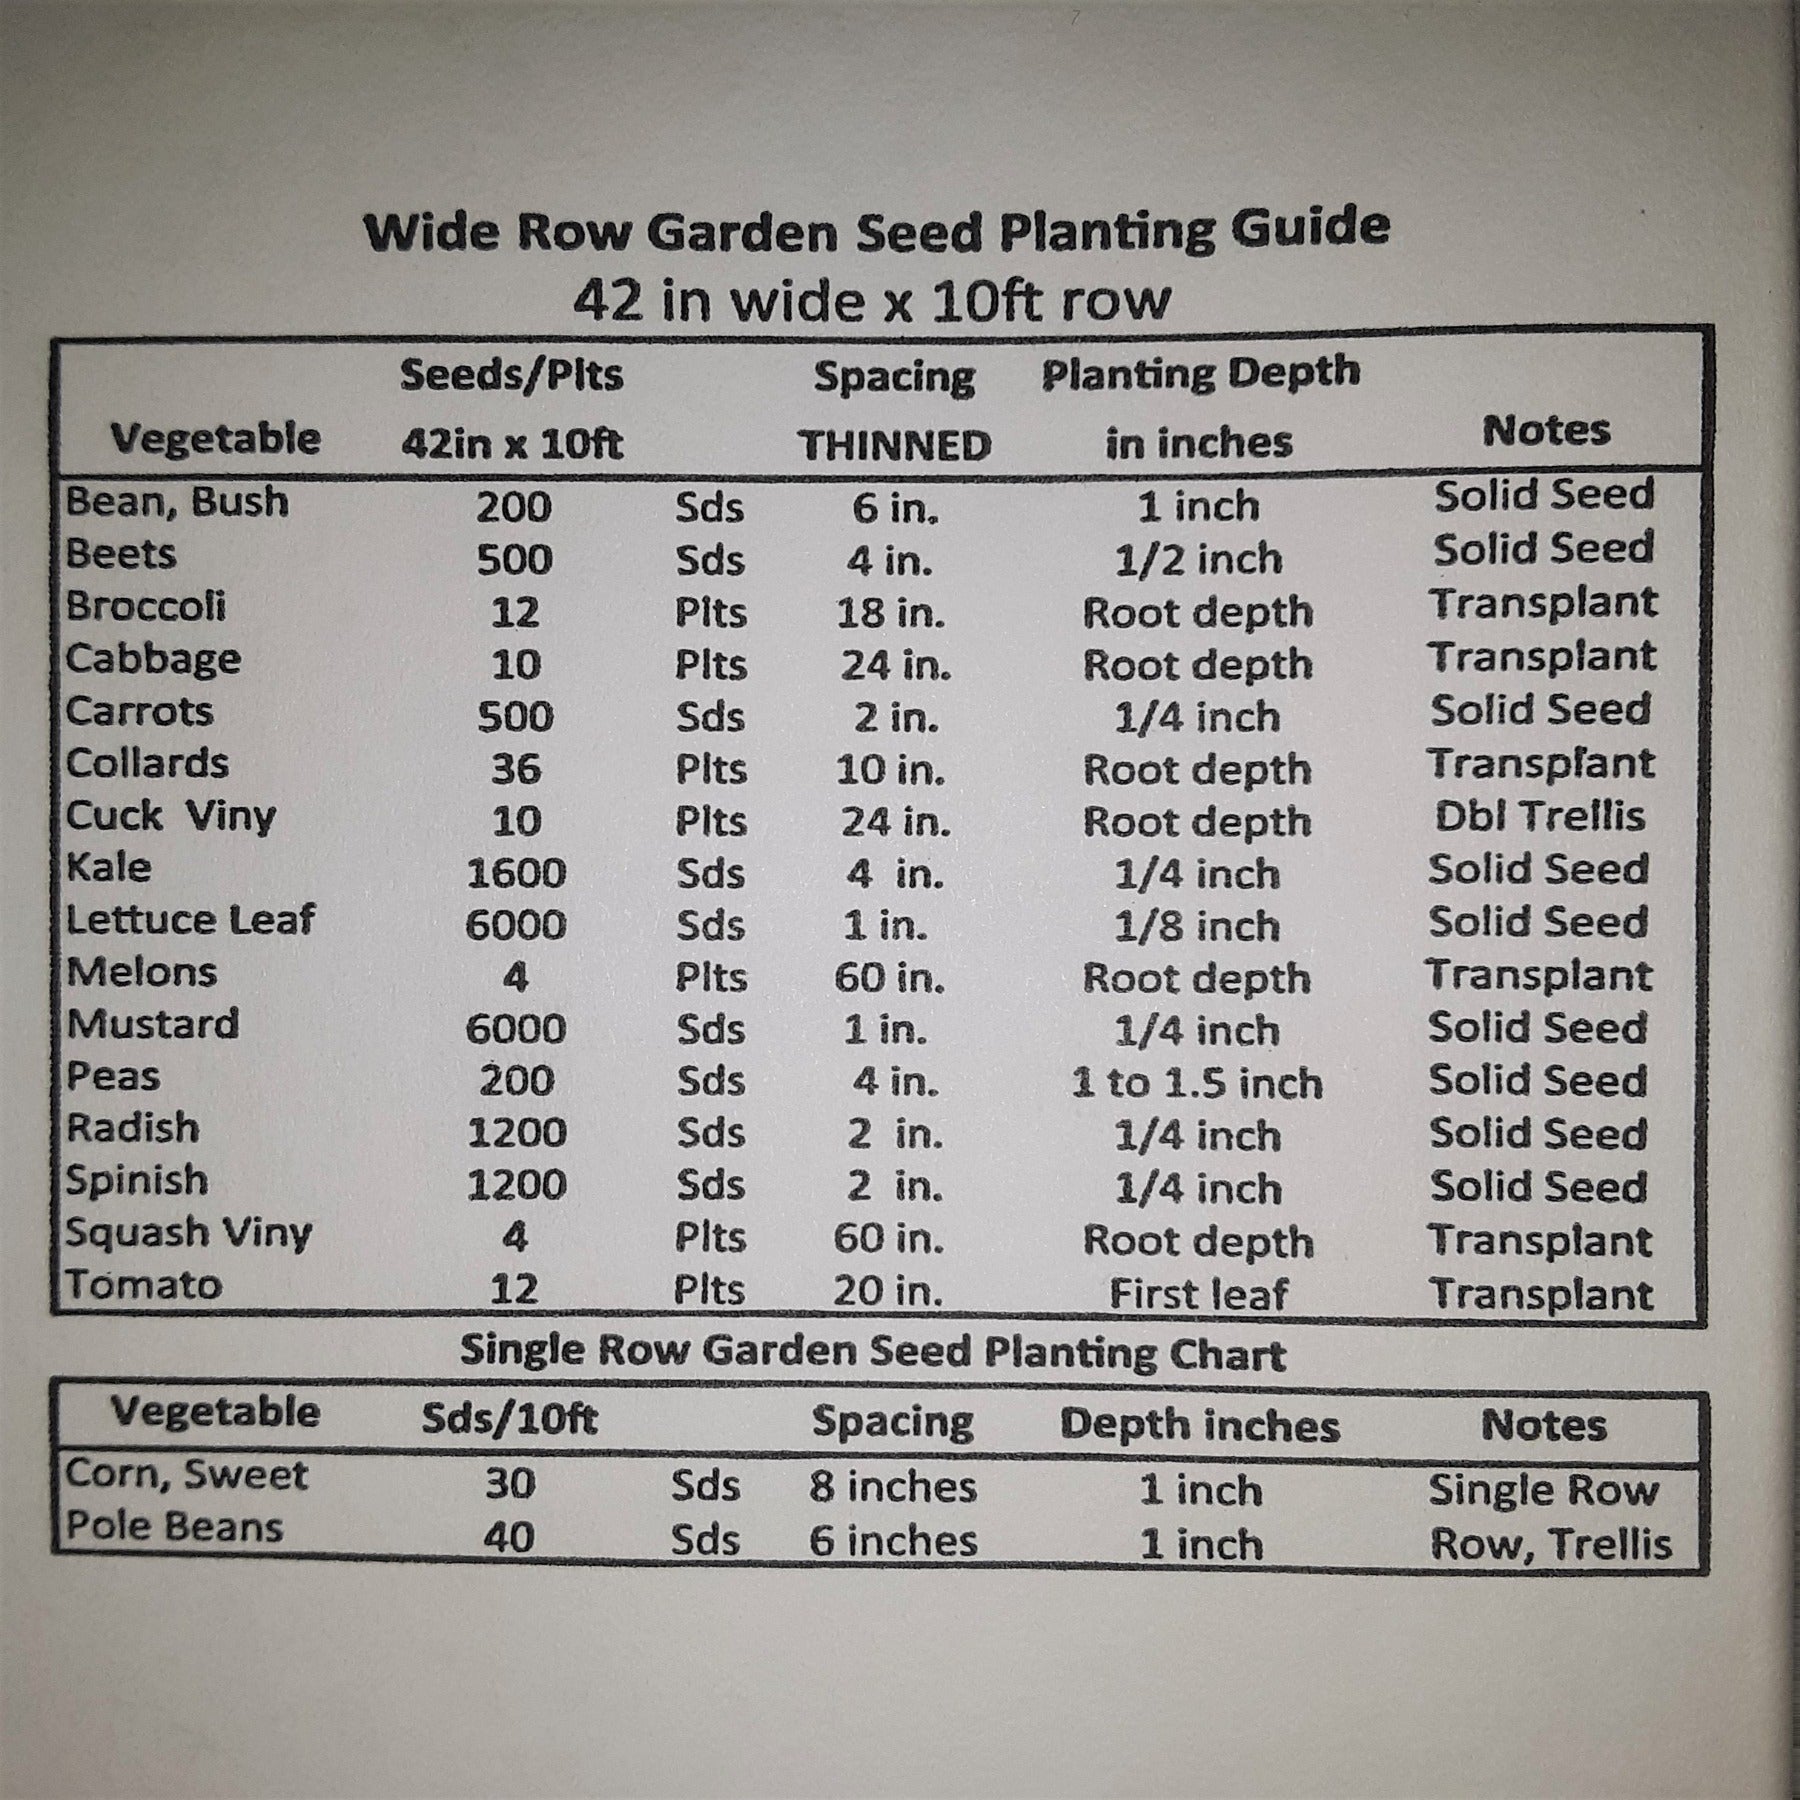 Provider Bush Green Bean Seeds